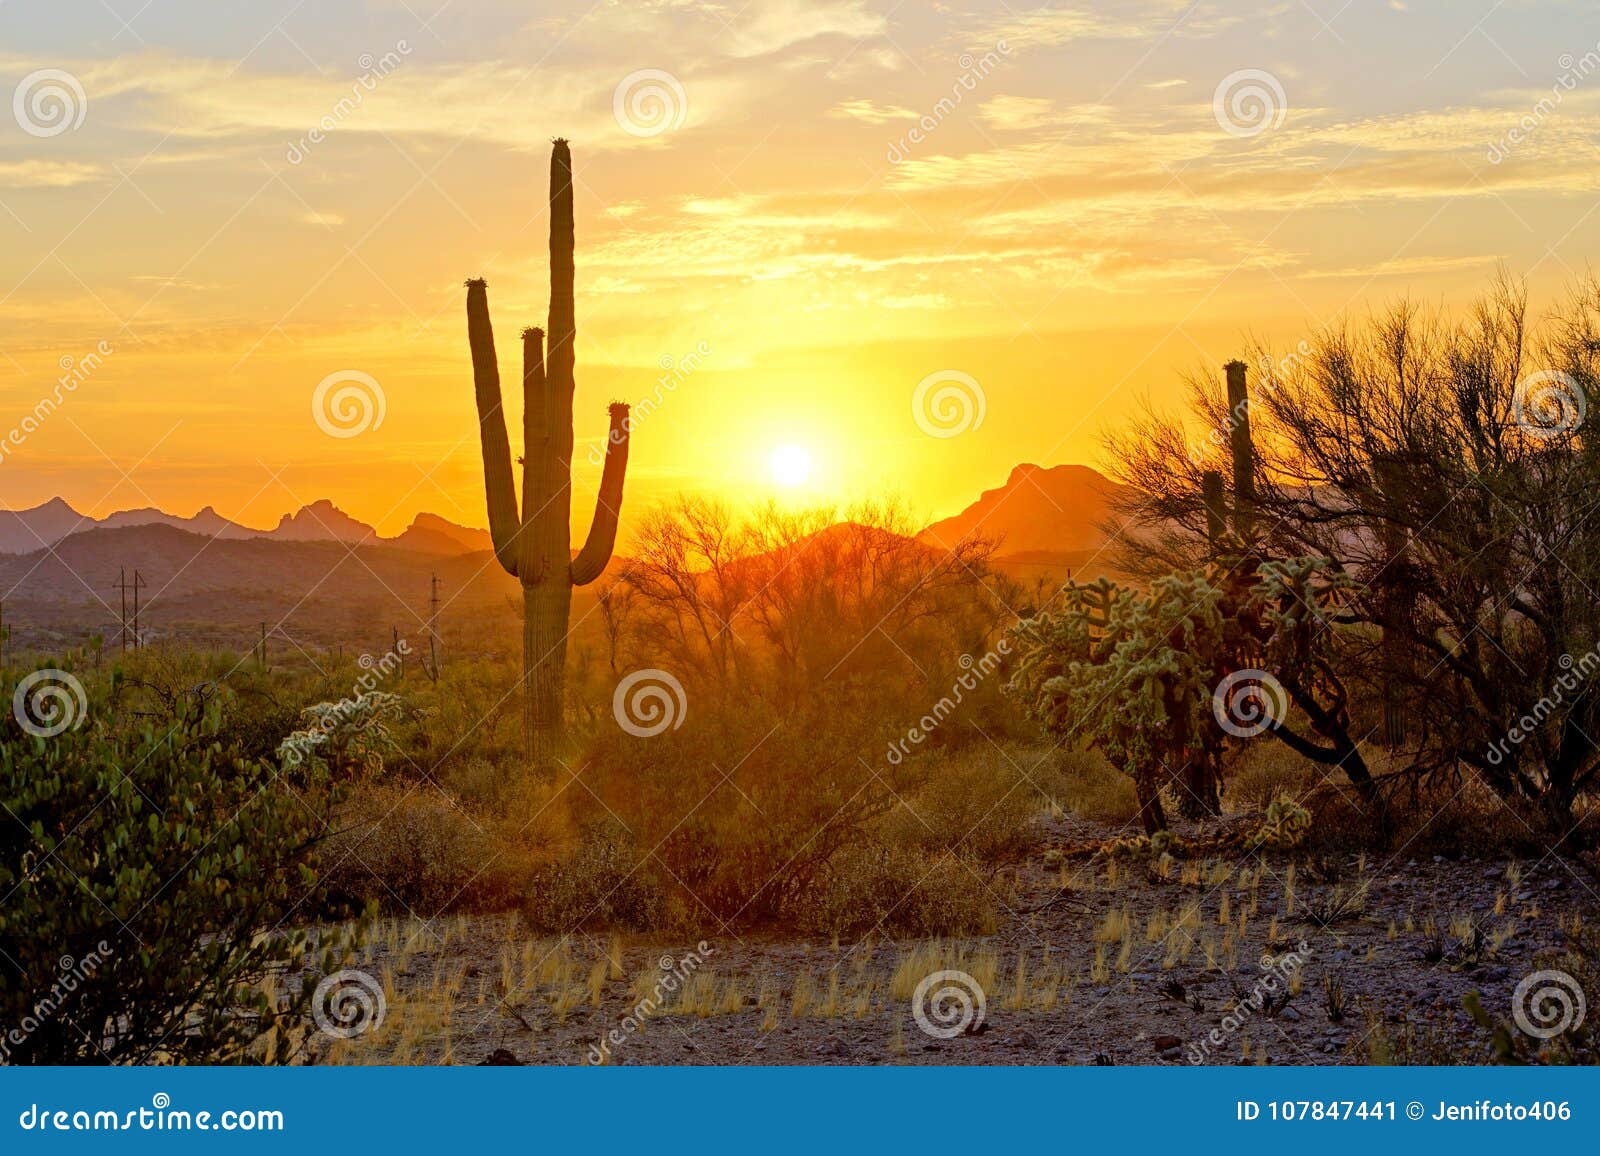 Sunset View of the Arizona Desert with Cacti Stock Image - Image of ...